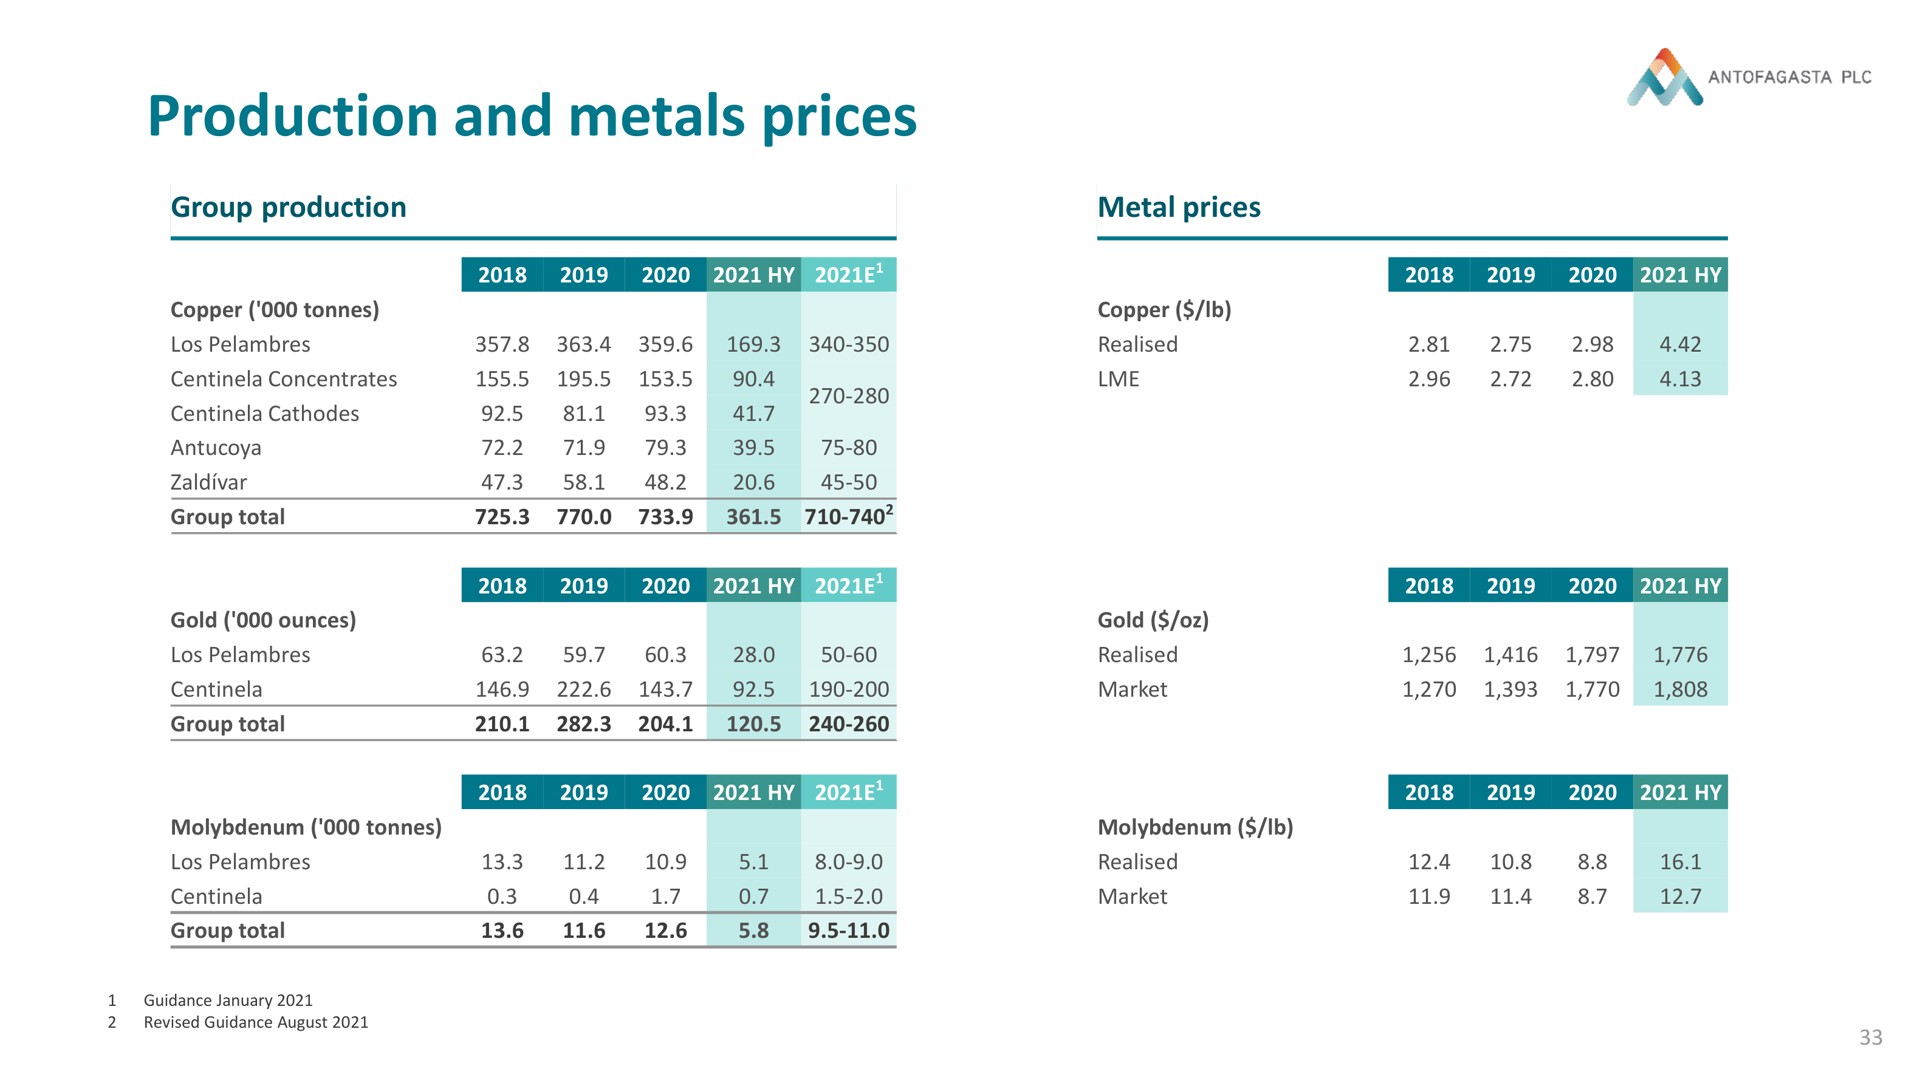 production and metals prices | Antofagasta